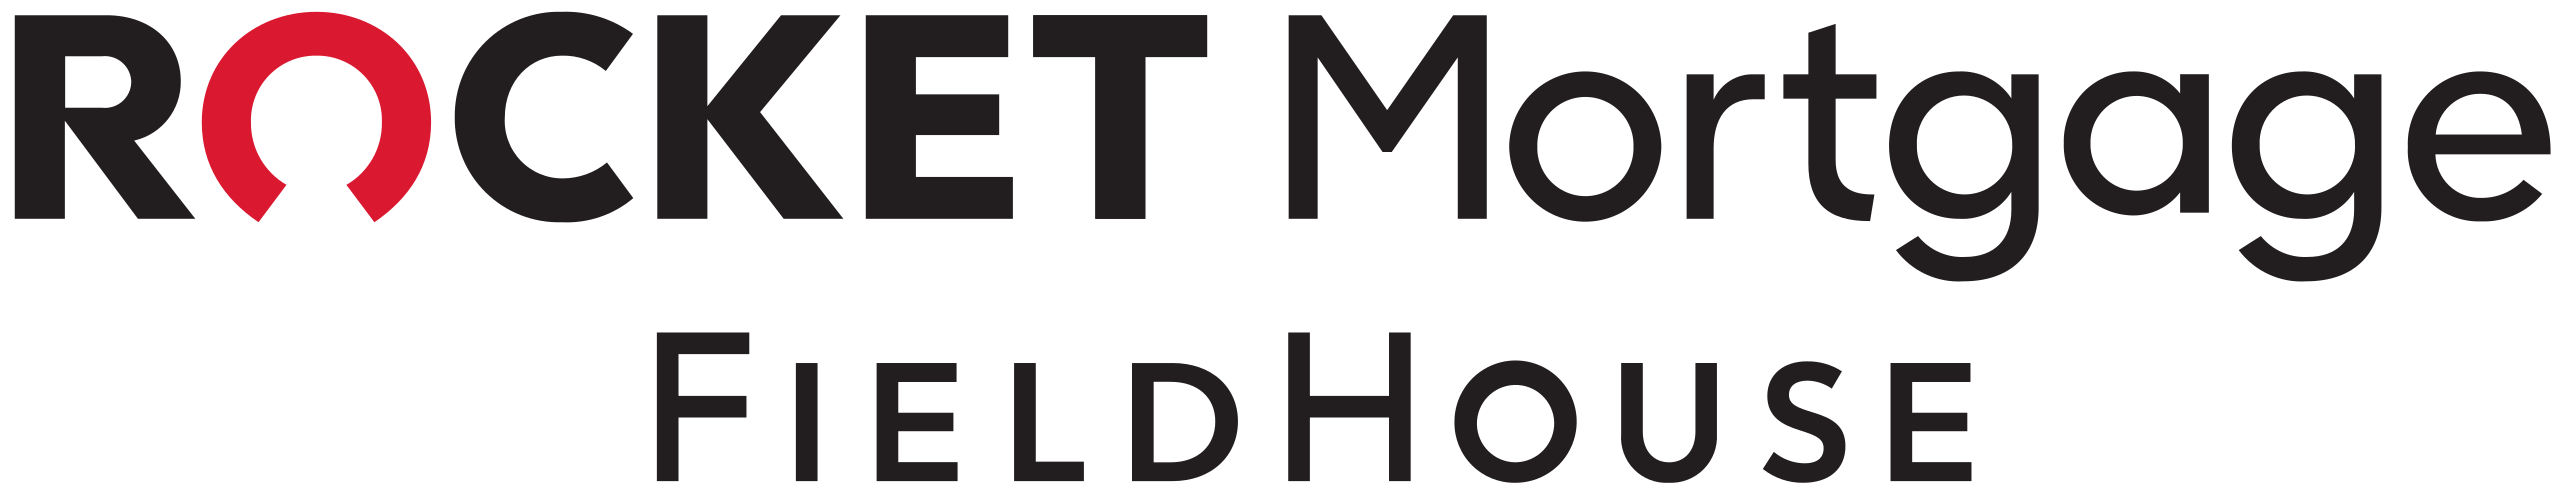 2560px-Rocket_Mortgage_Fieldhouse_logo.svg